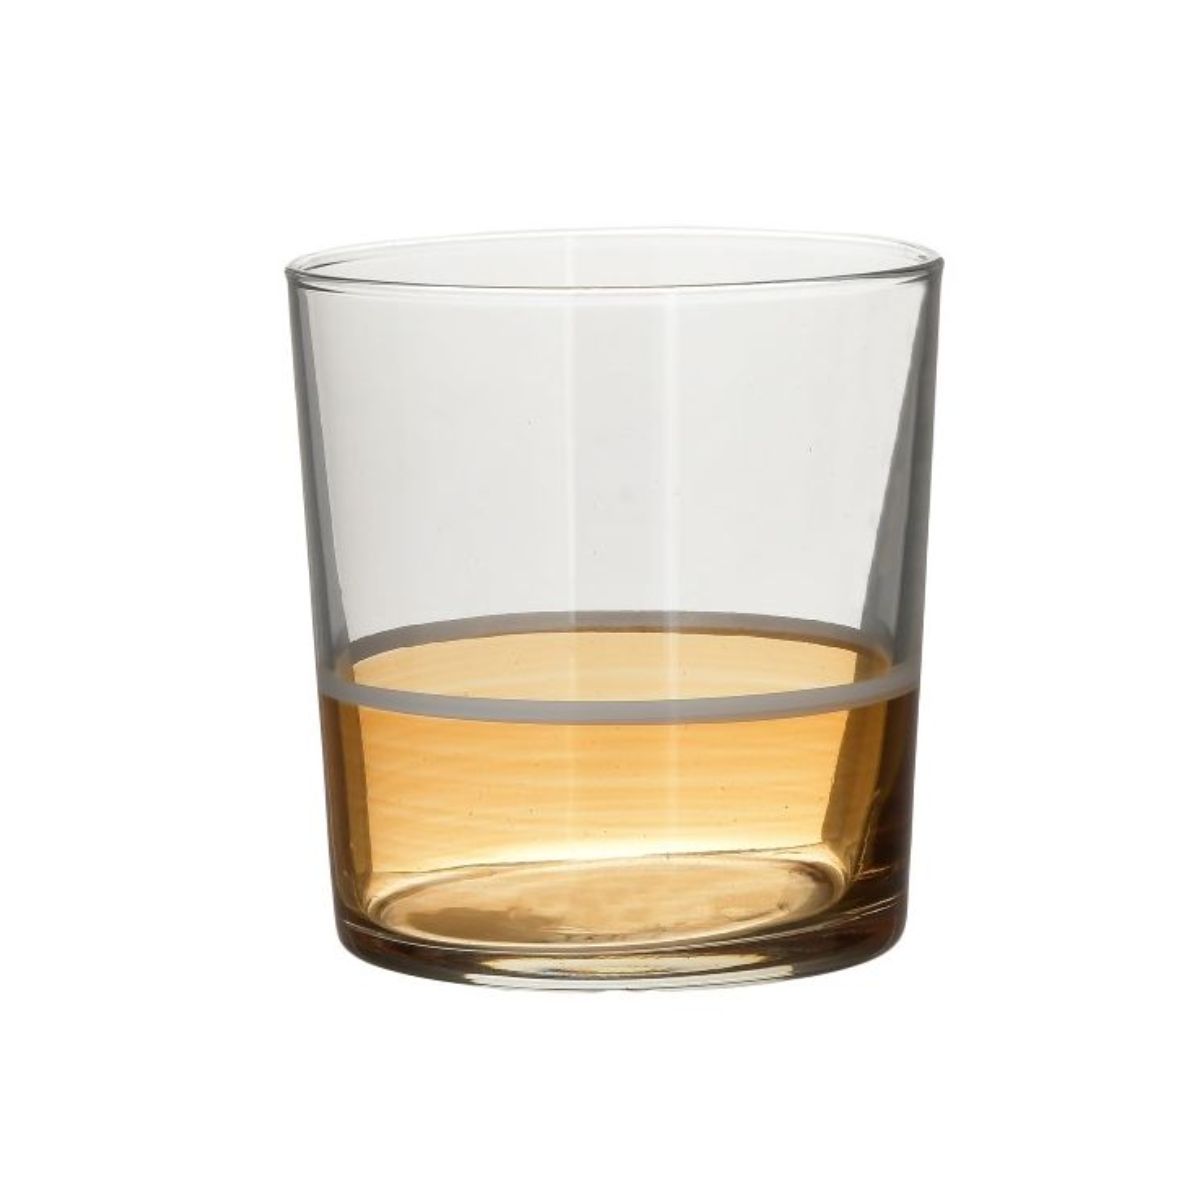 Bucatarie - Set 6 pahare de apa Inart,din sticla, transparent/aramiu, 0.38 l, hectarul.ro